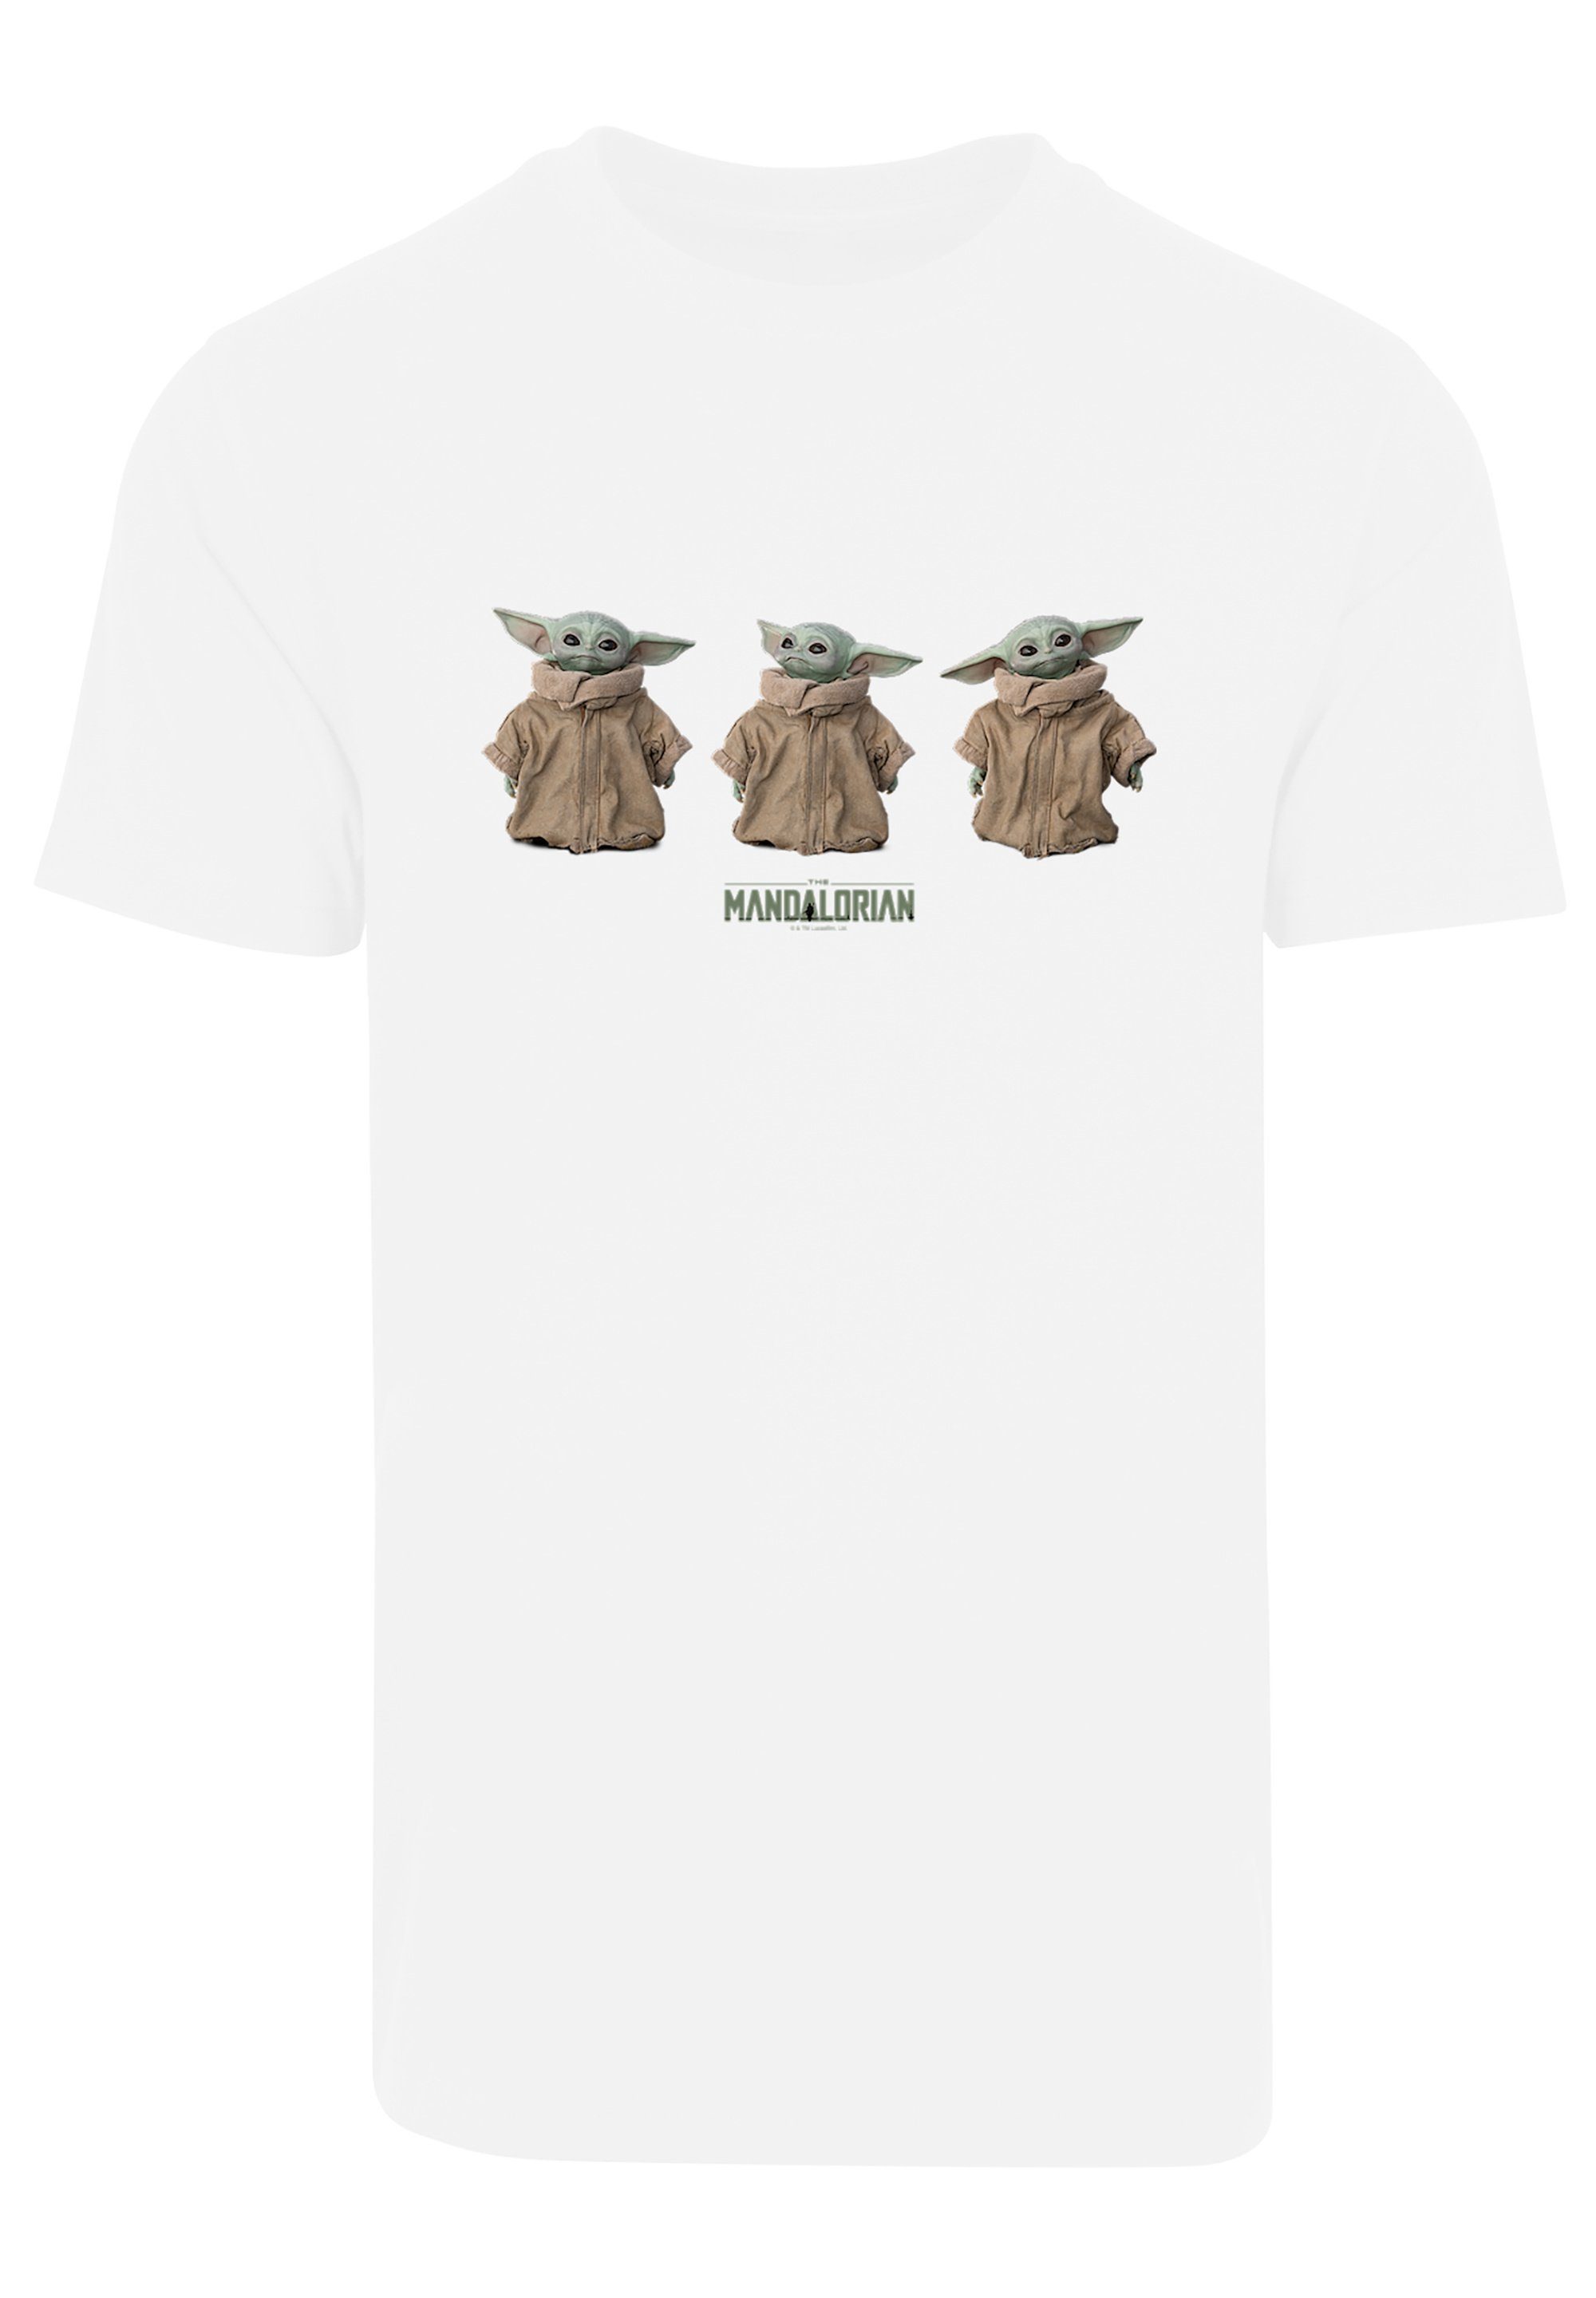 Krieg Star Sterne Wars F4NT4STIC Yoda T-Shirt Mandalorian weiß The der Baby Print